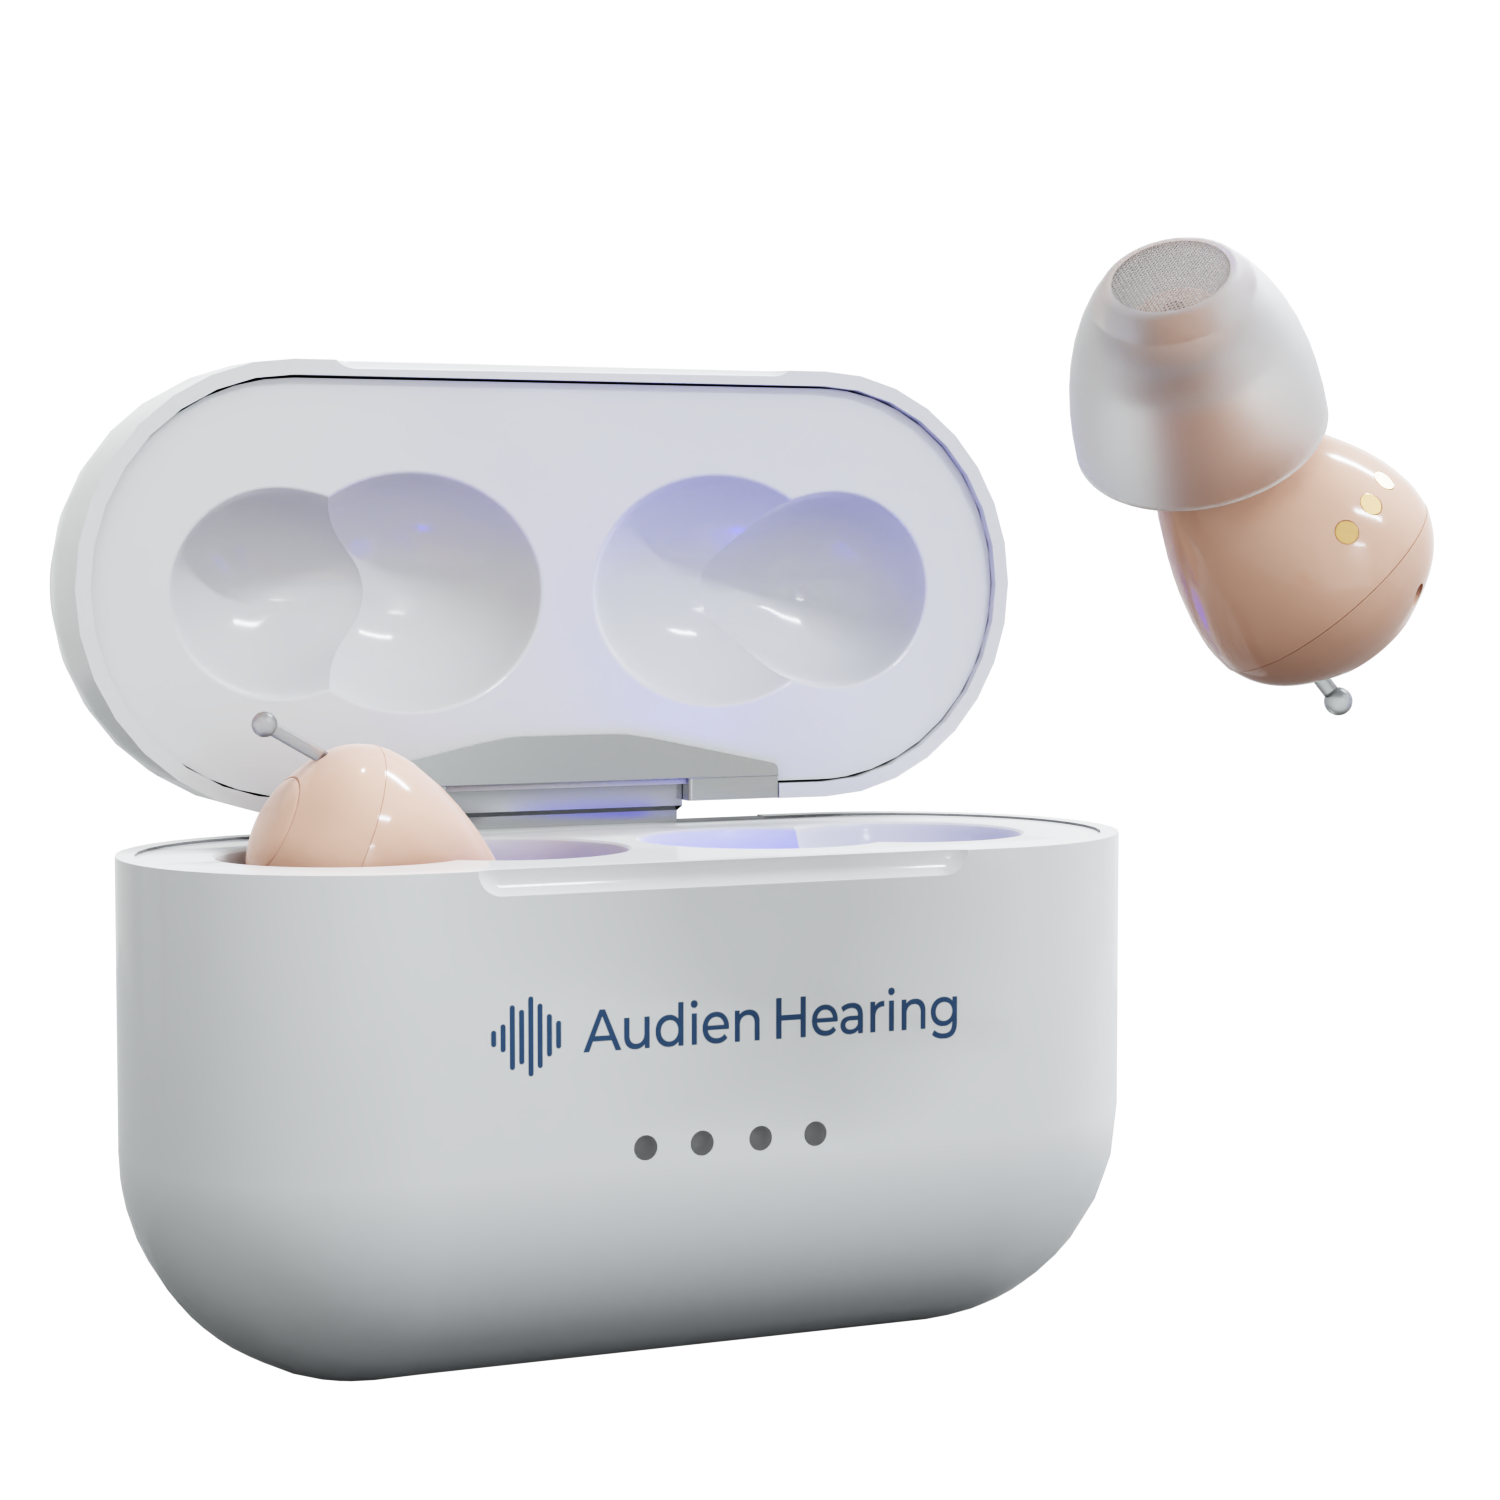 Audien Hearing Atom Pro 2 OTC Hearing Aid - image 1 of 7